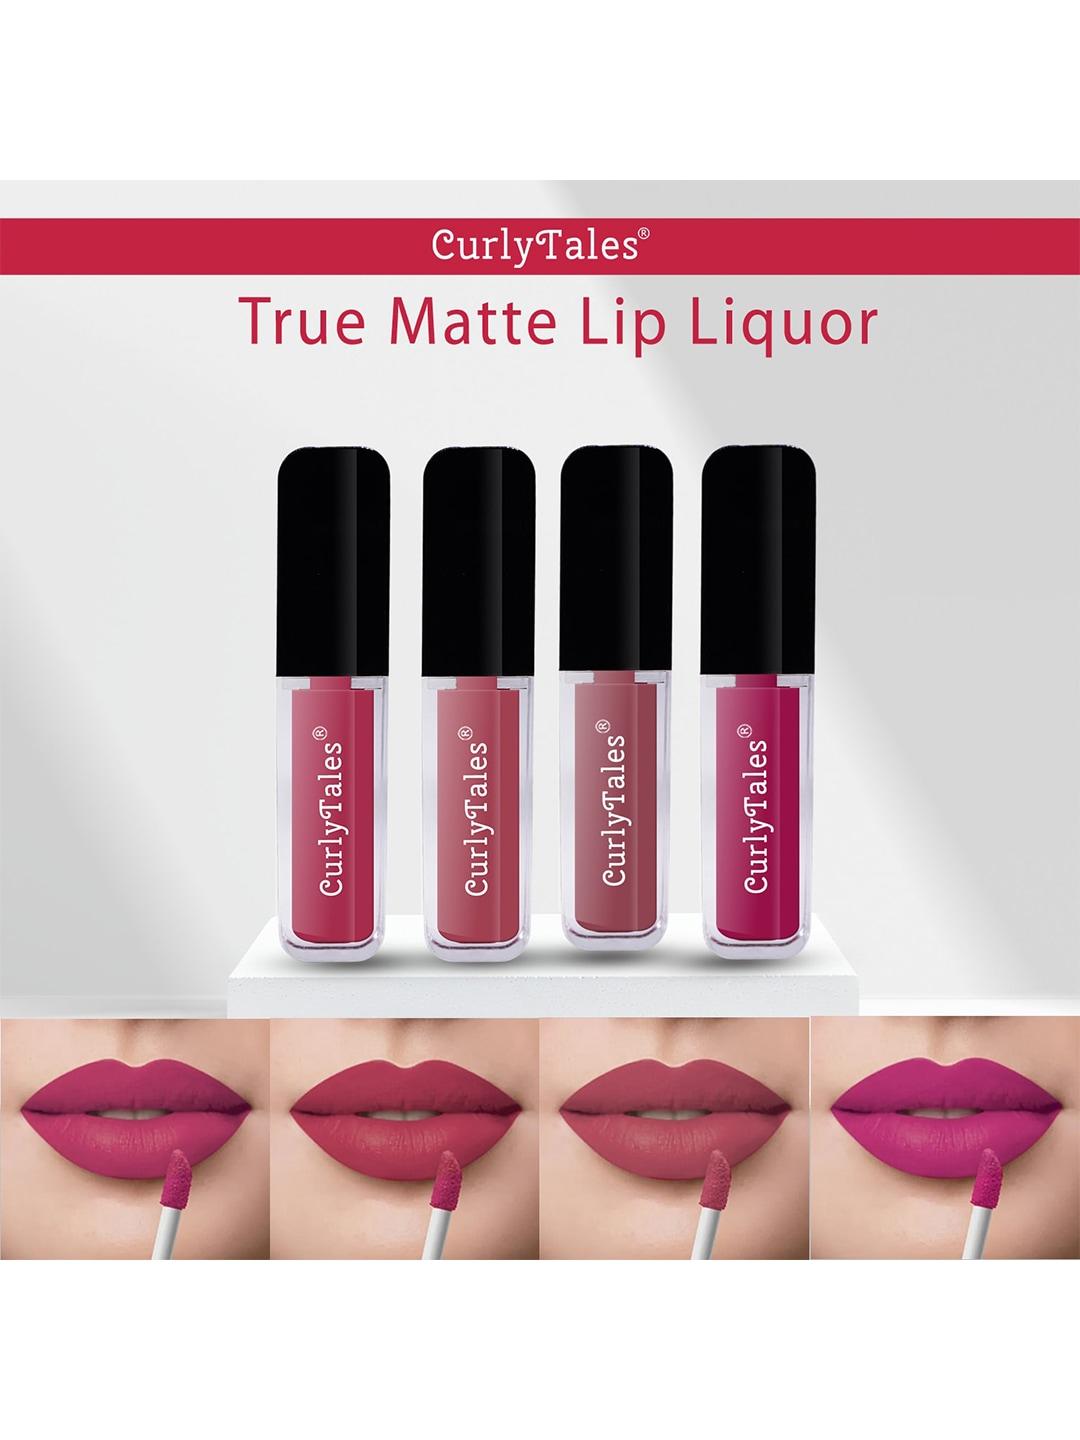 curlytales set of 4 rich formula vitamin e enriched matte liquid lipsticks 12ml each